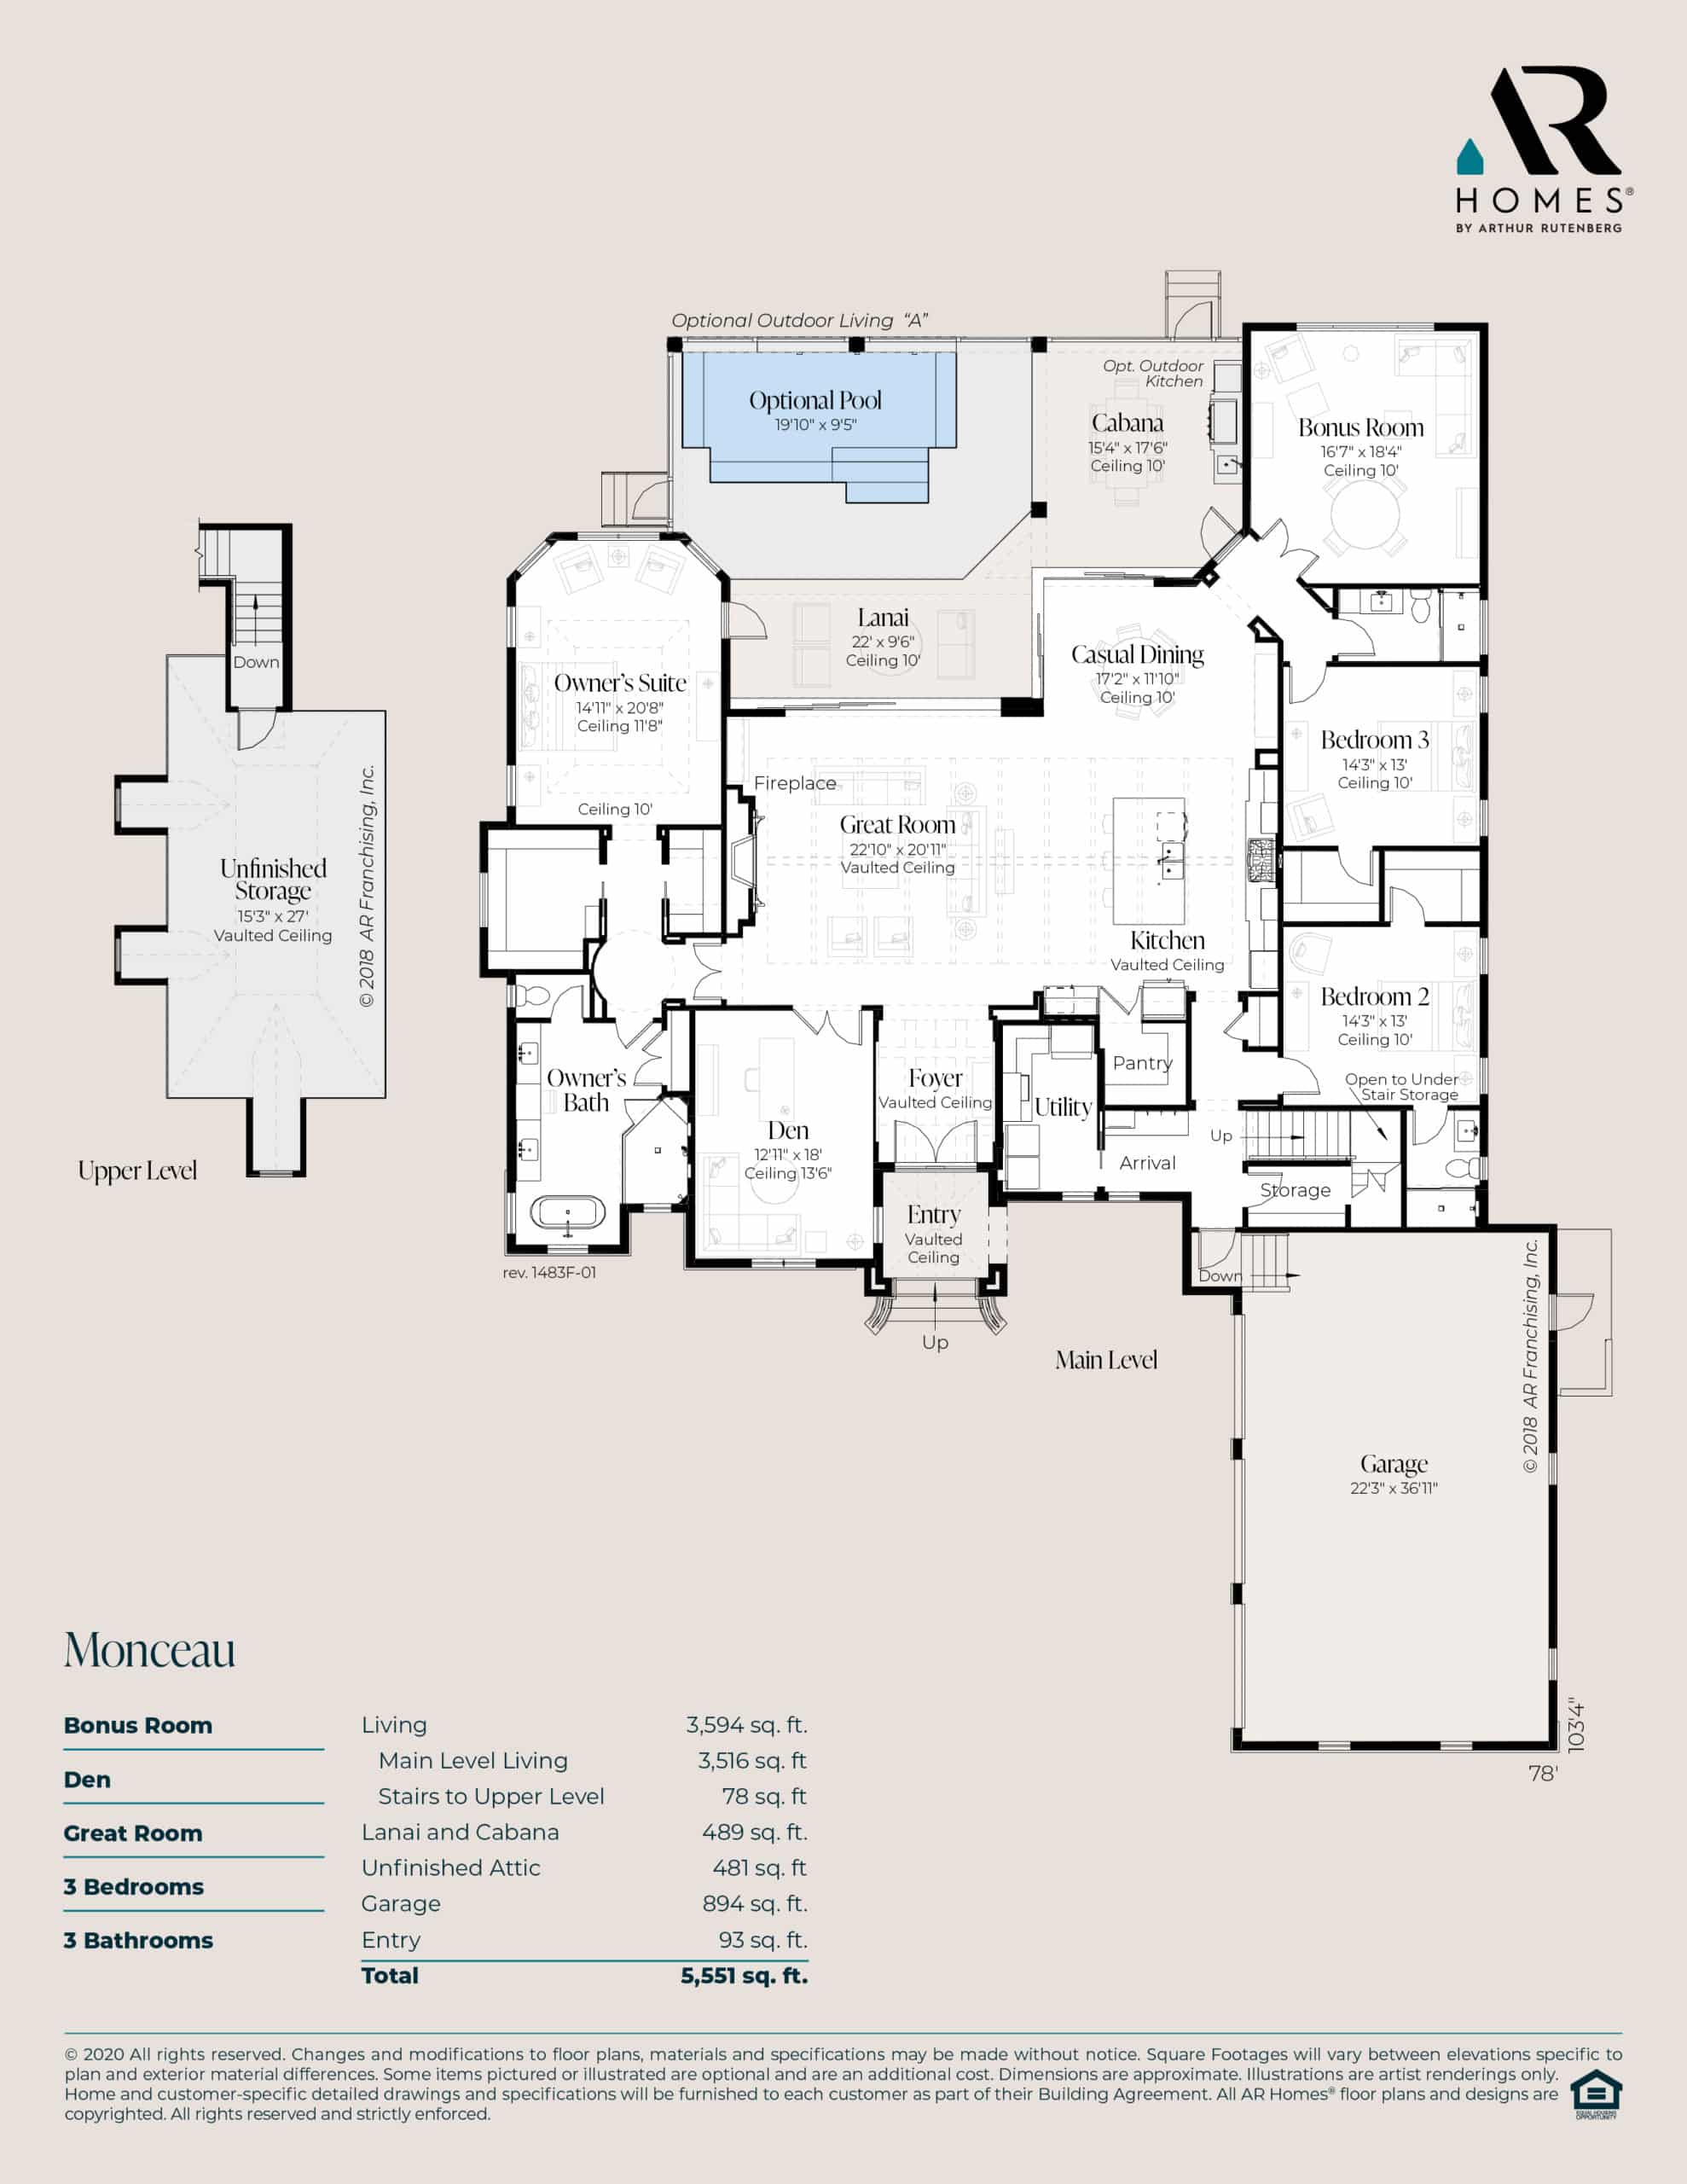 The Monceau Plan Ar Homes By Arthur Rutenberg